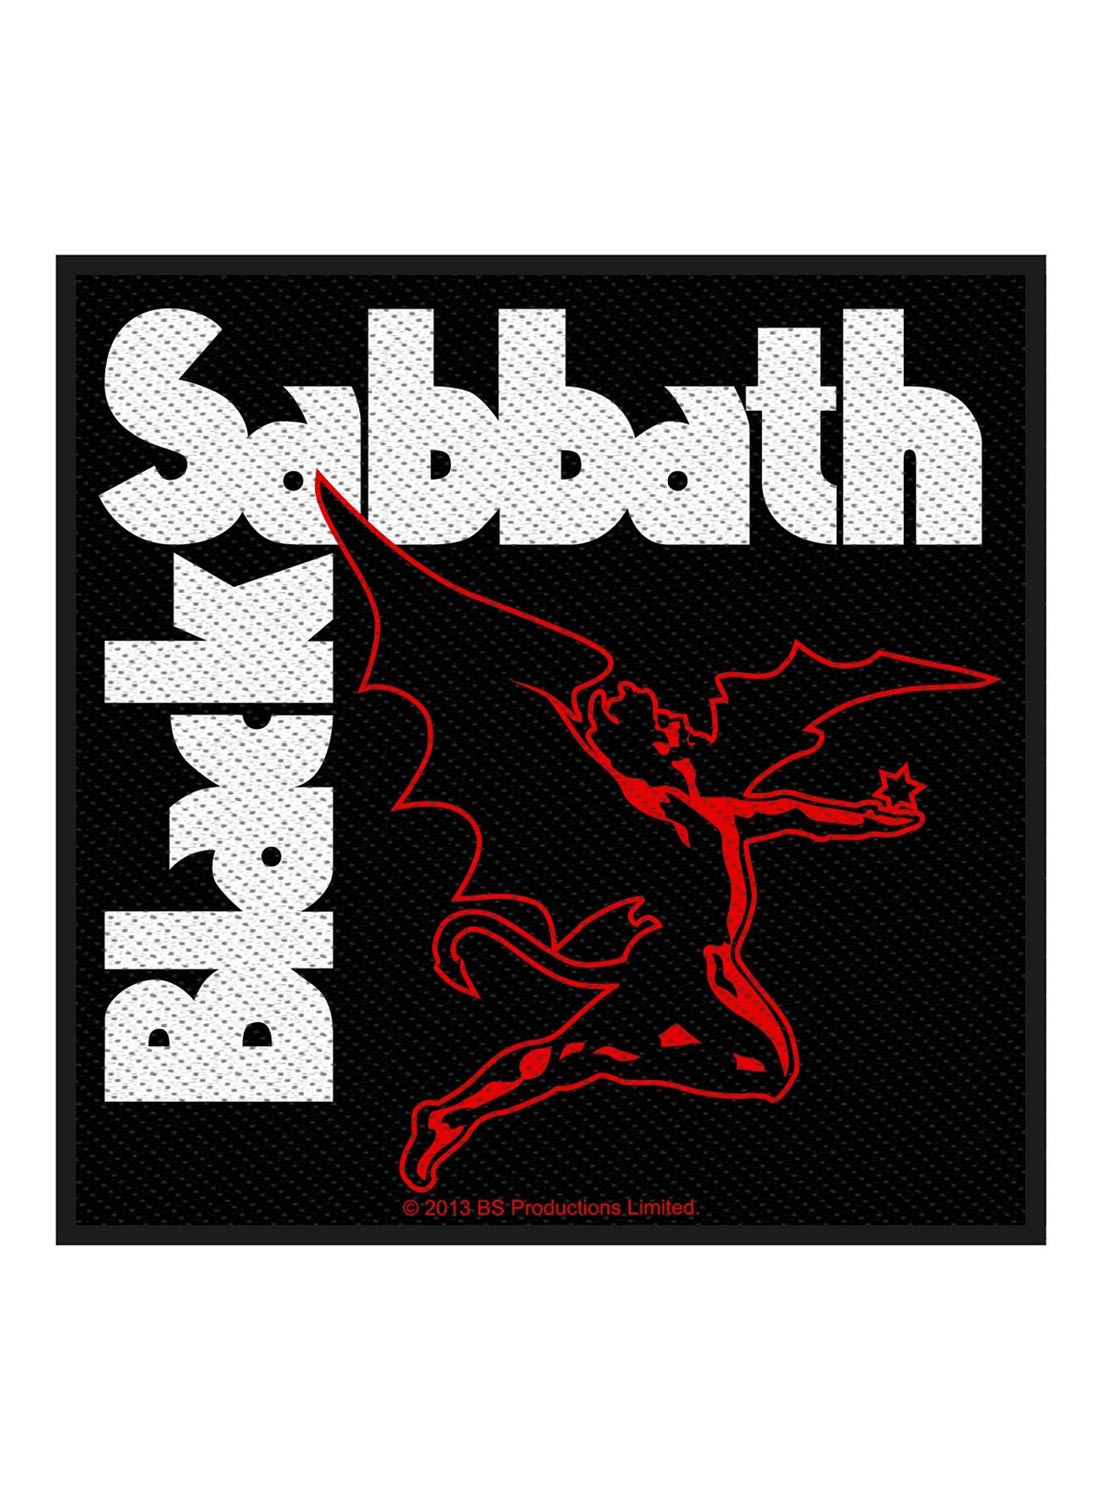 Black Sabbath Creature